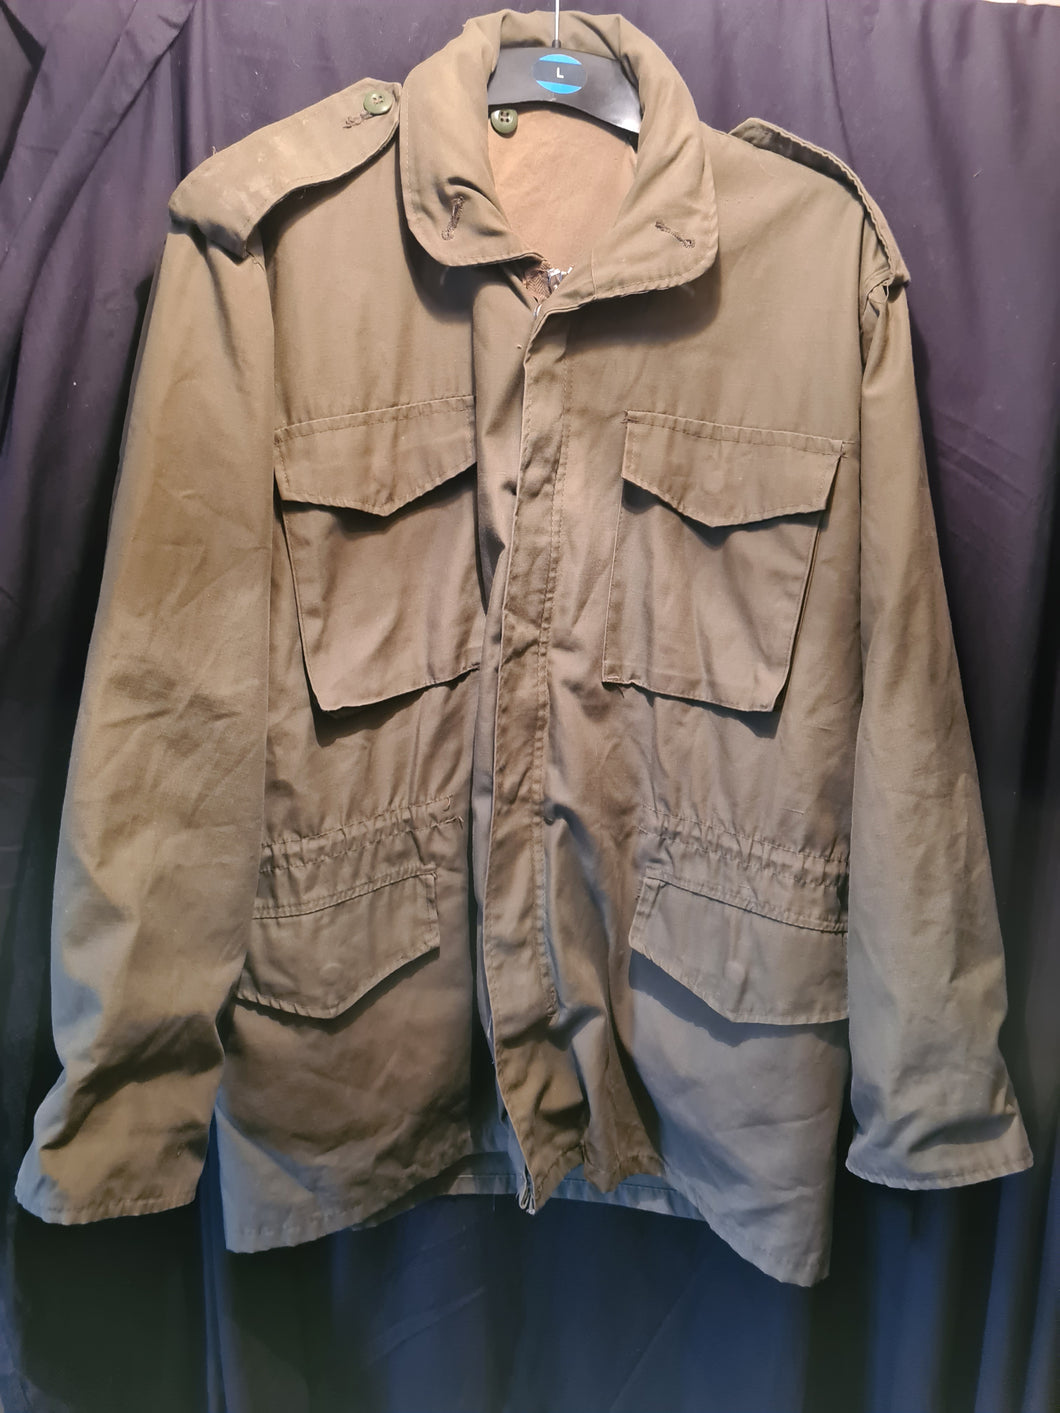 Vietnam War era M65 jacket and liner